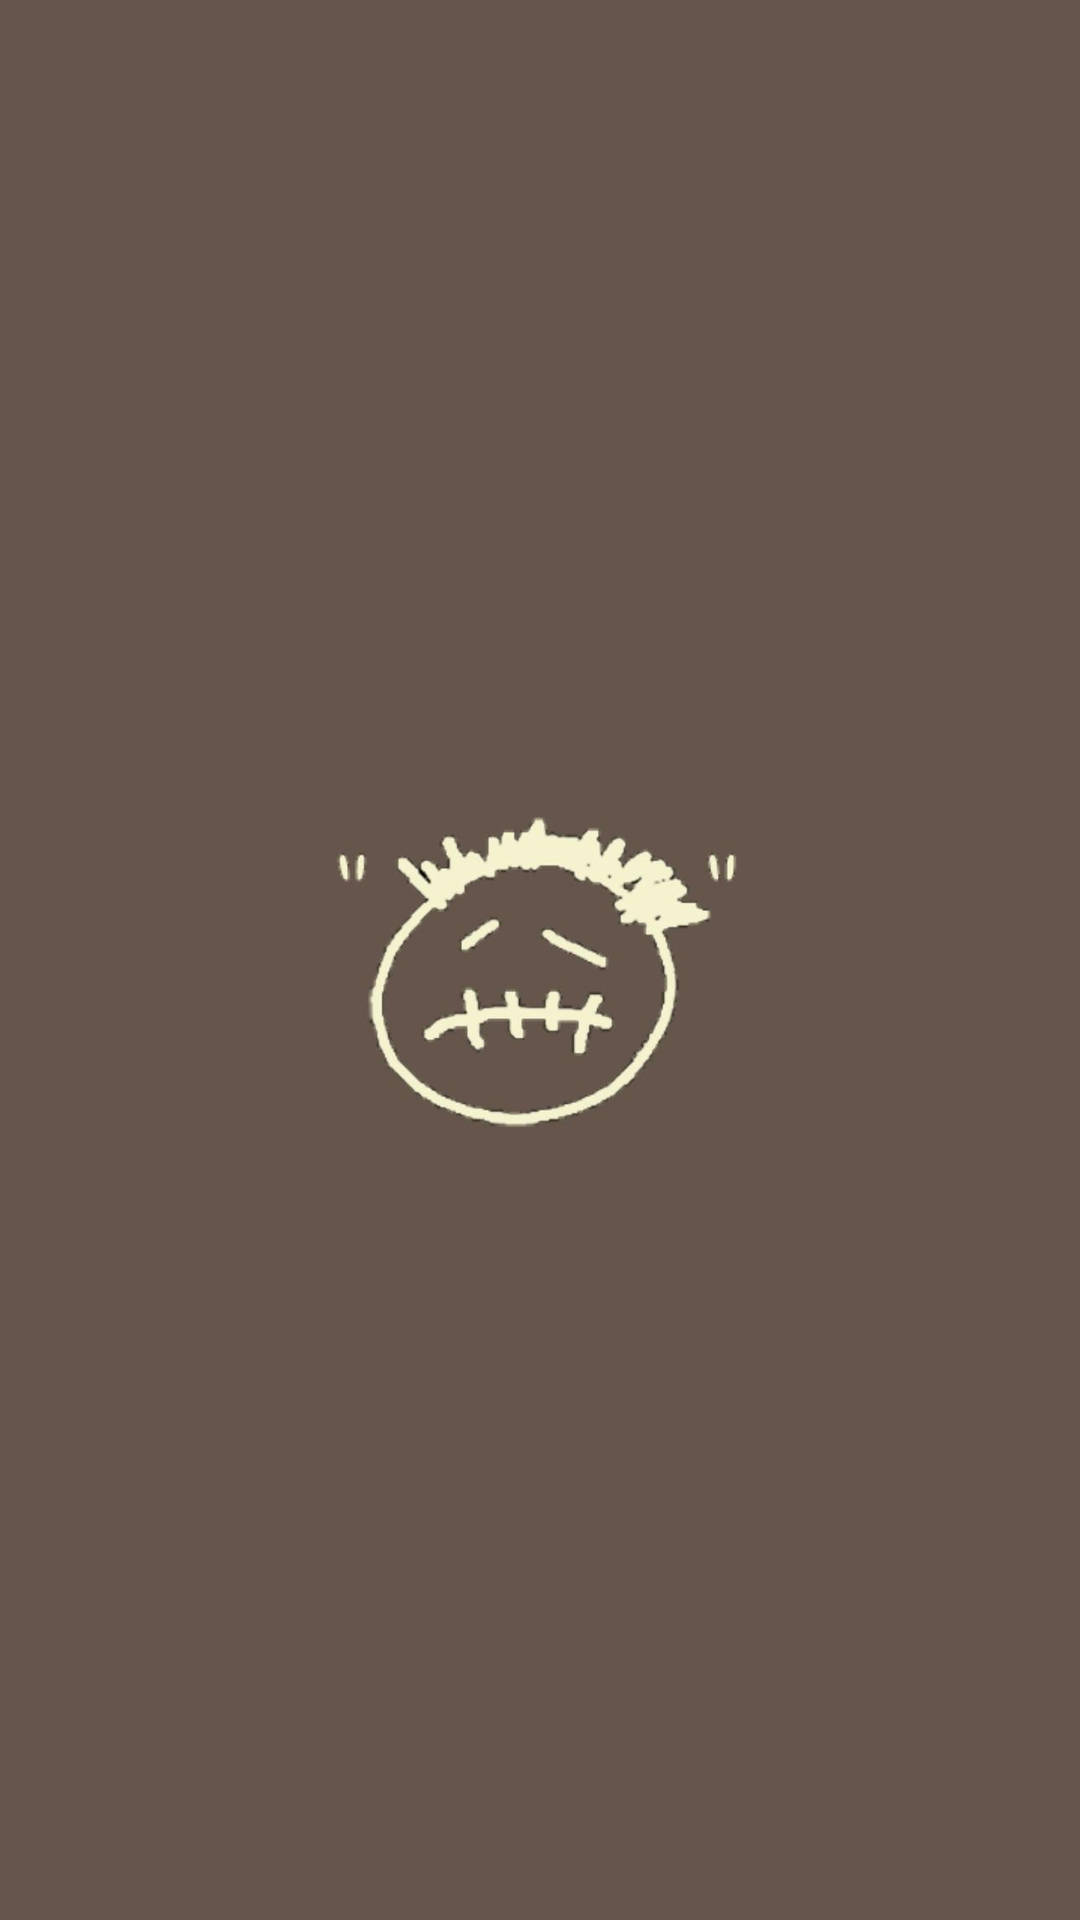 Cactus Jack Sad Boy Logo Wallpaper